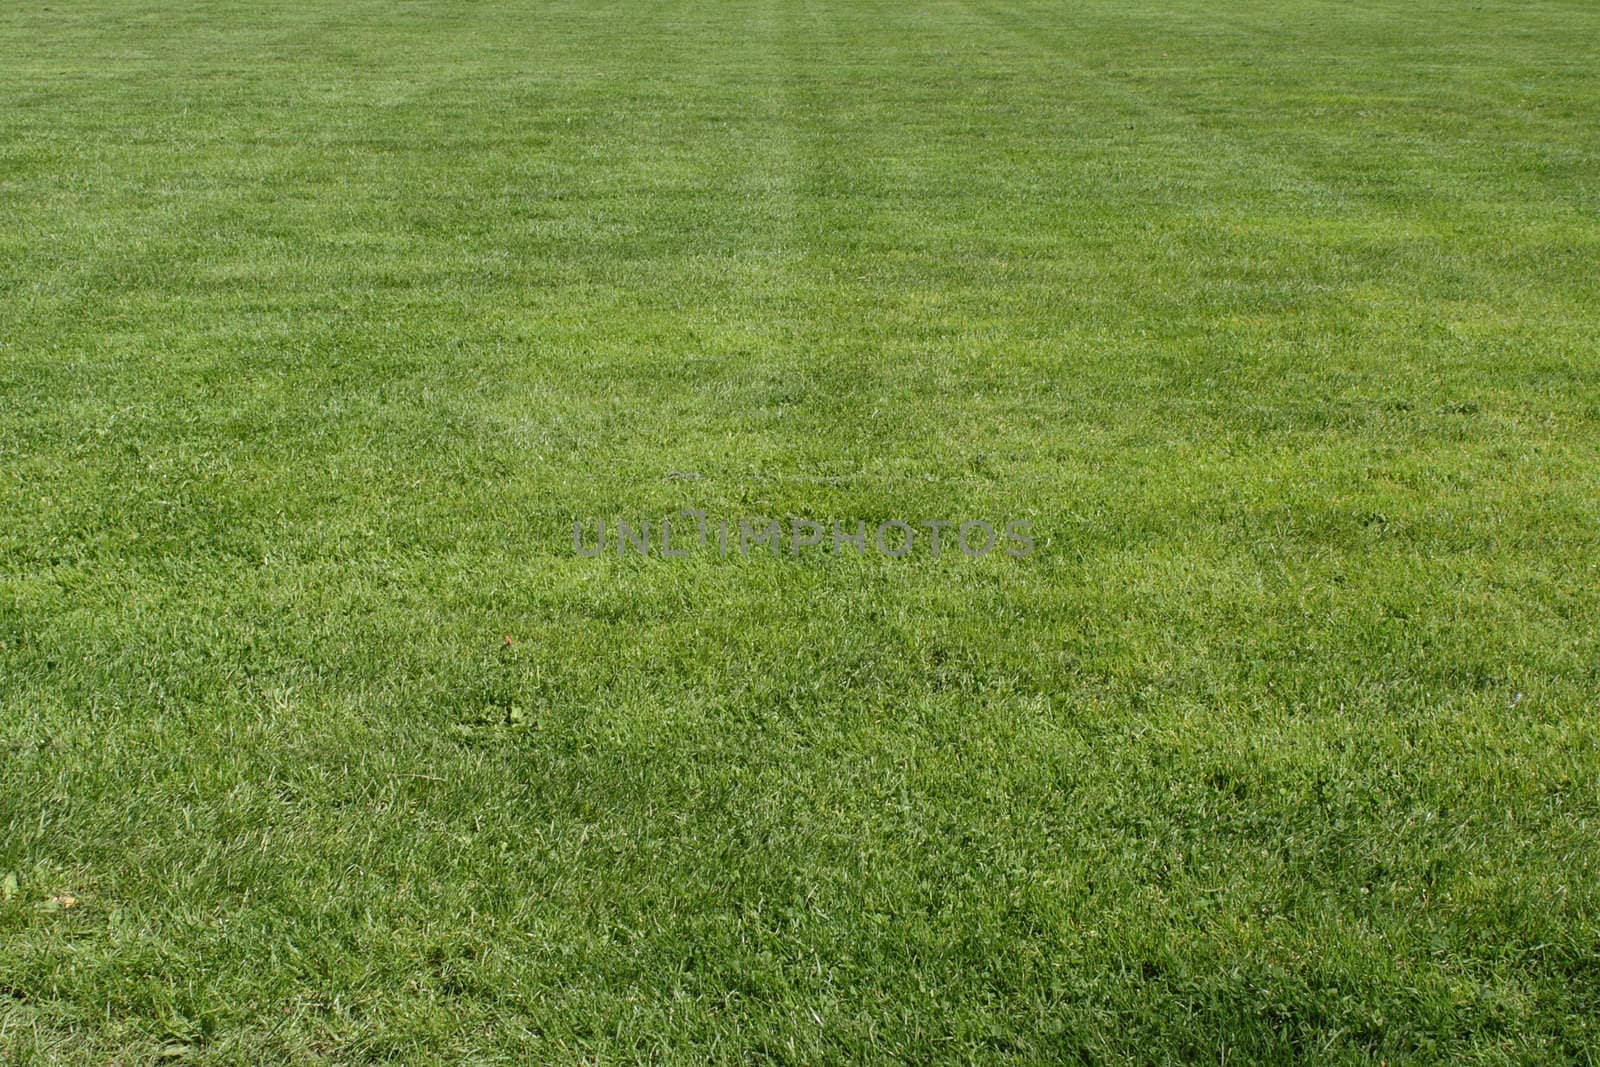 Field of grass by pulen